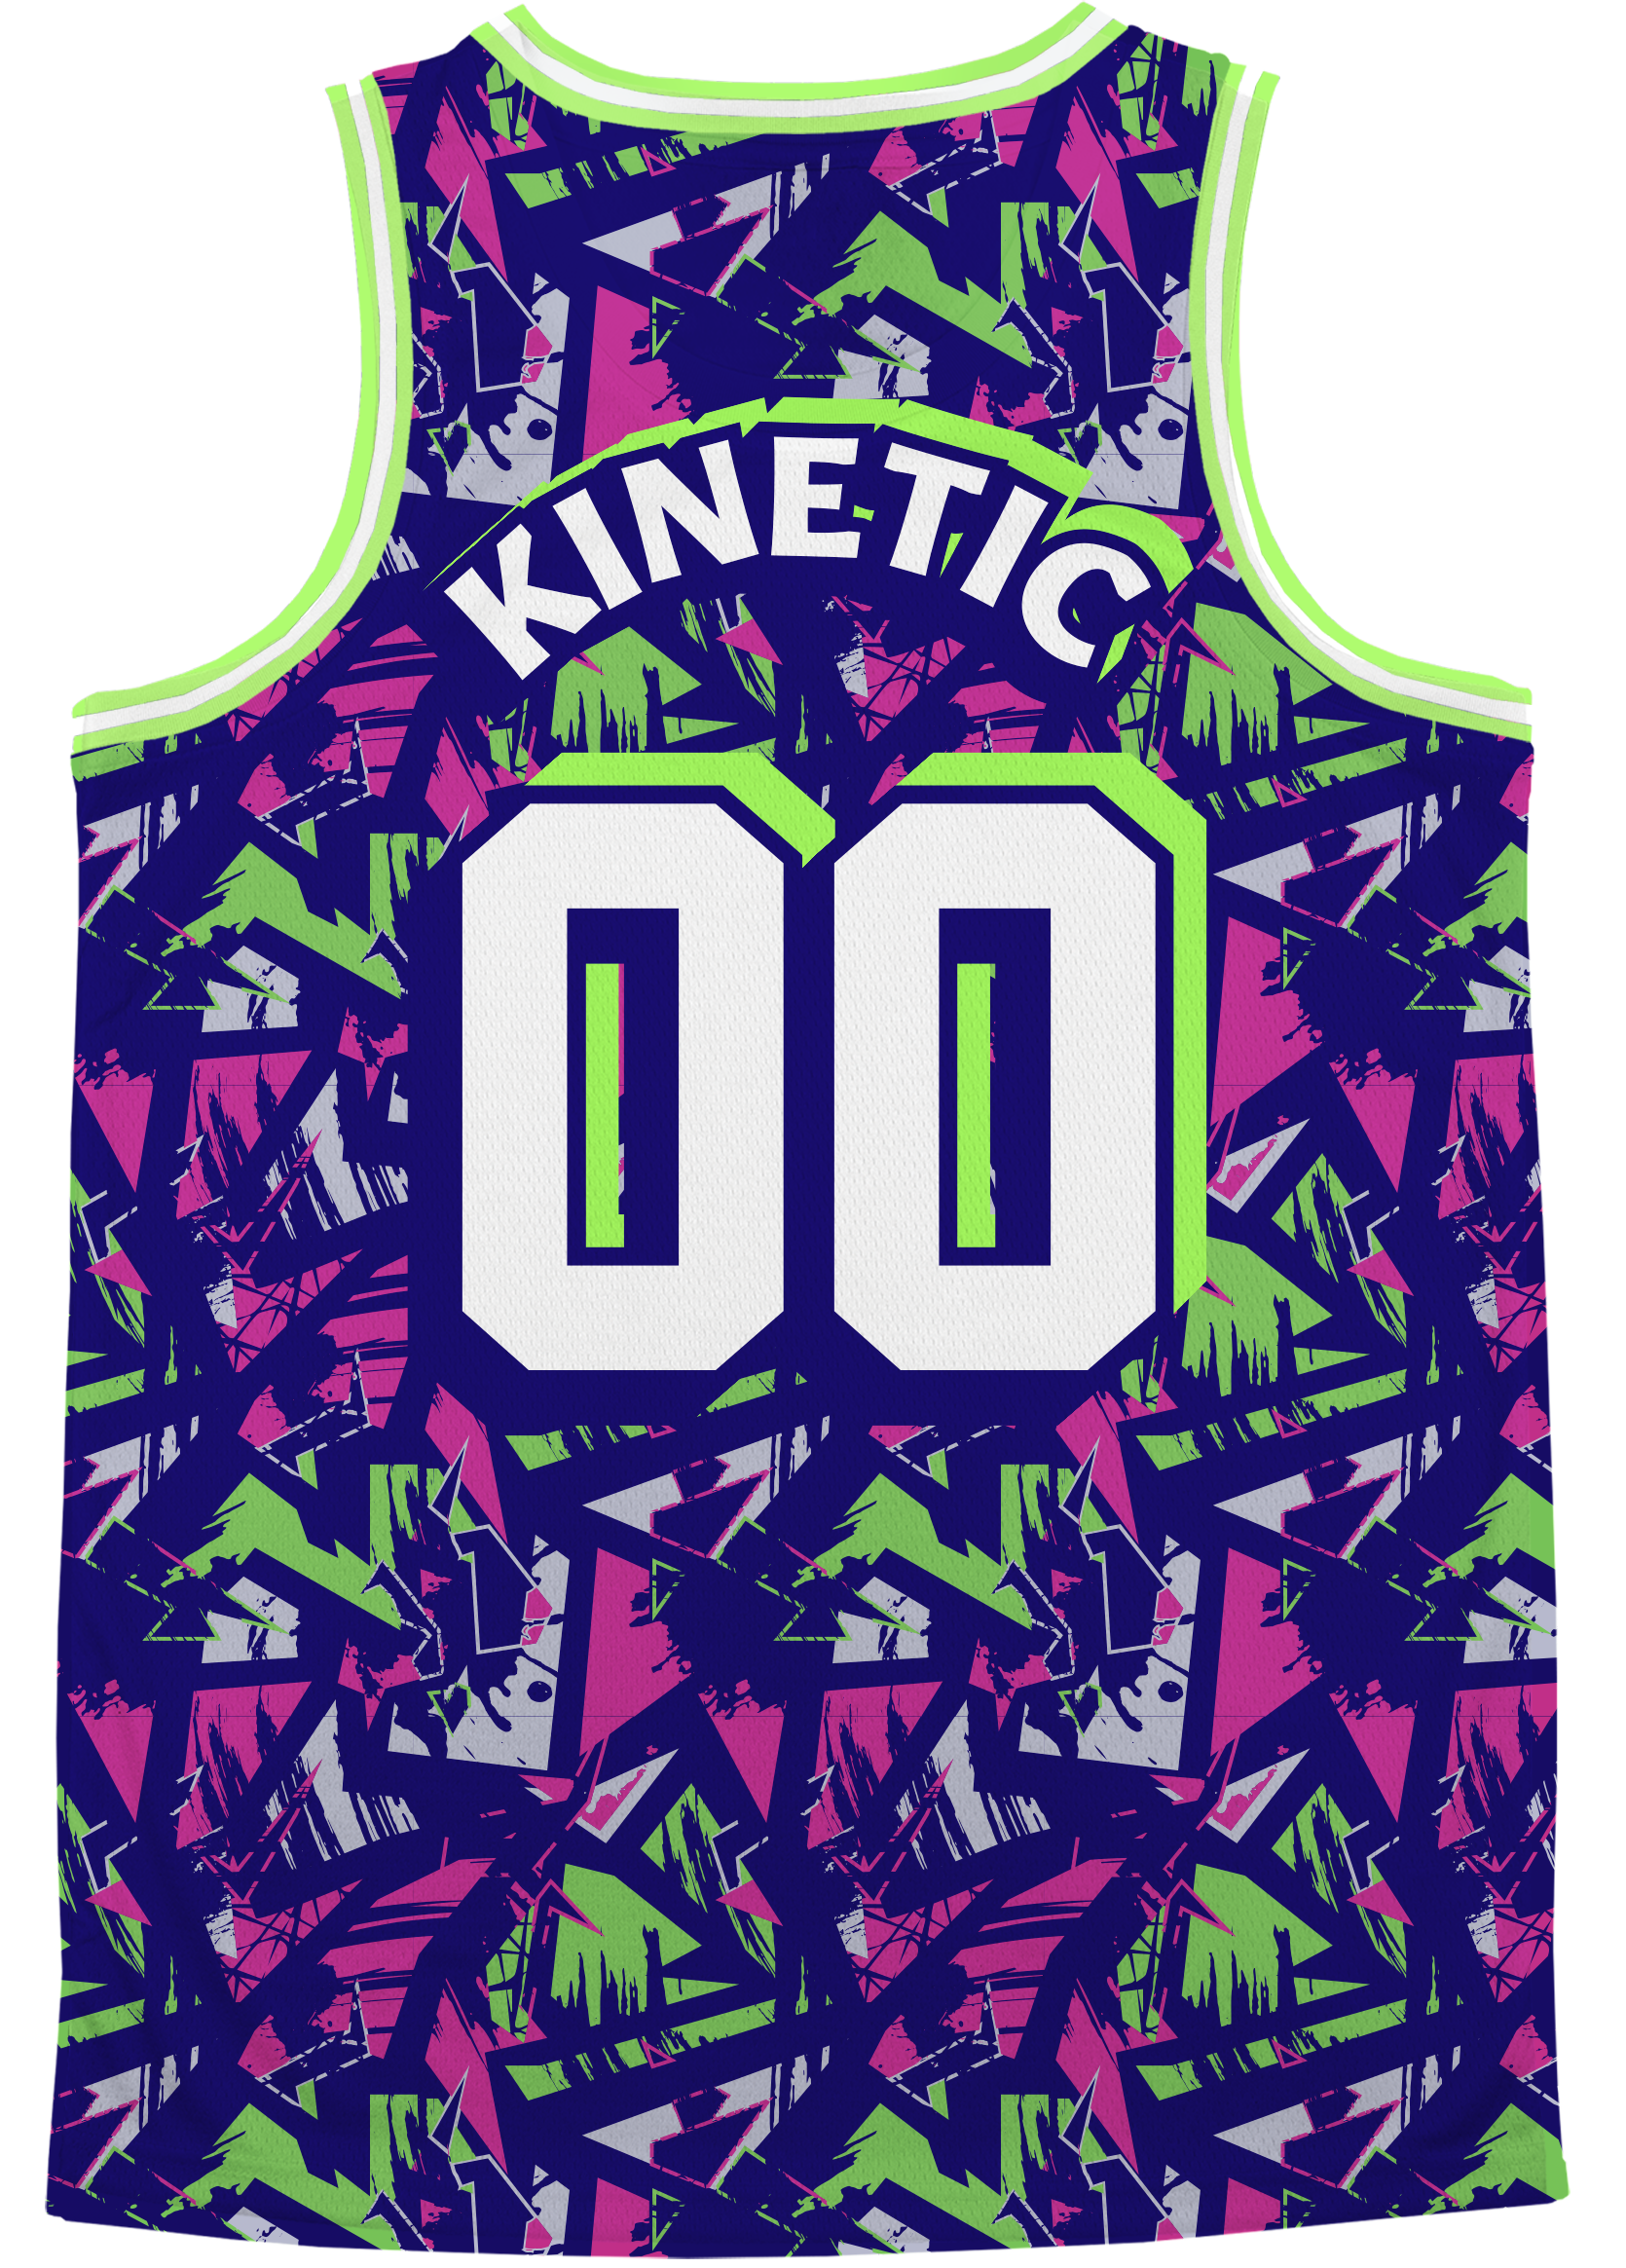 PHI KAPPA TAU - Purple Shrouds Basketball Jersey